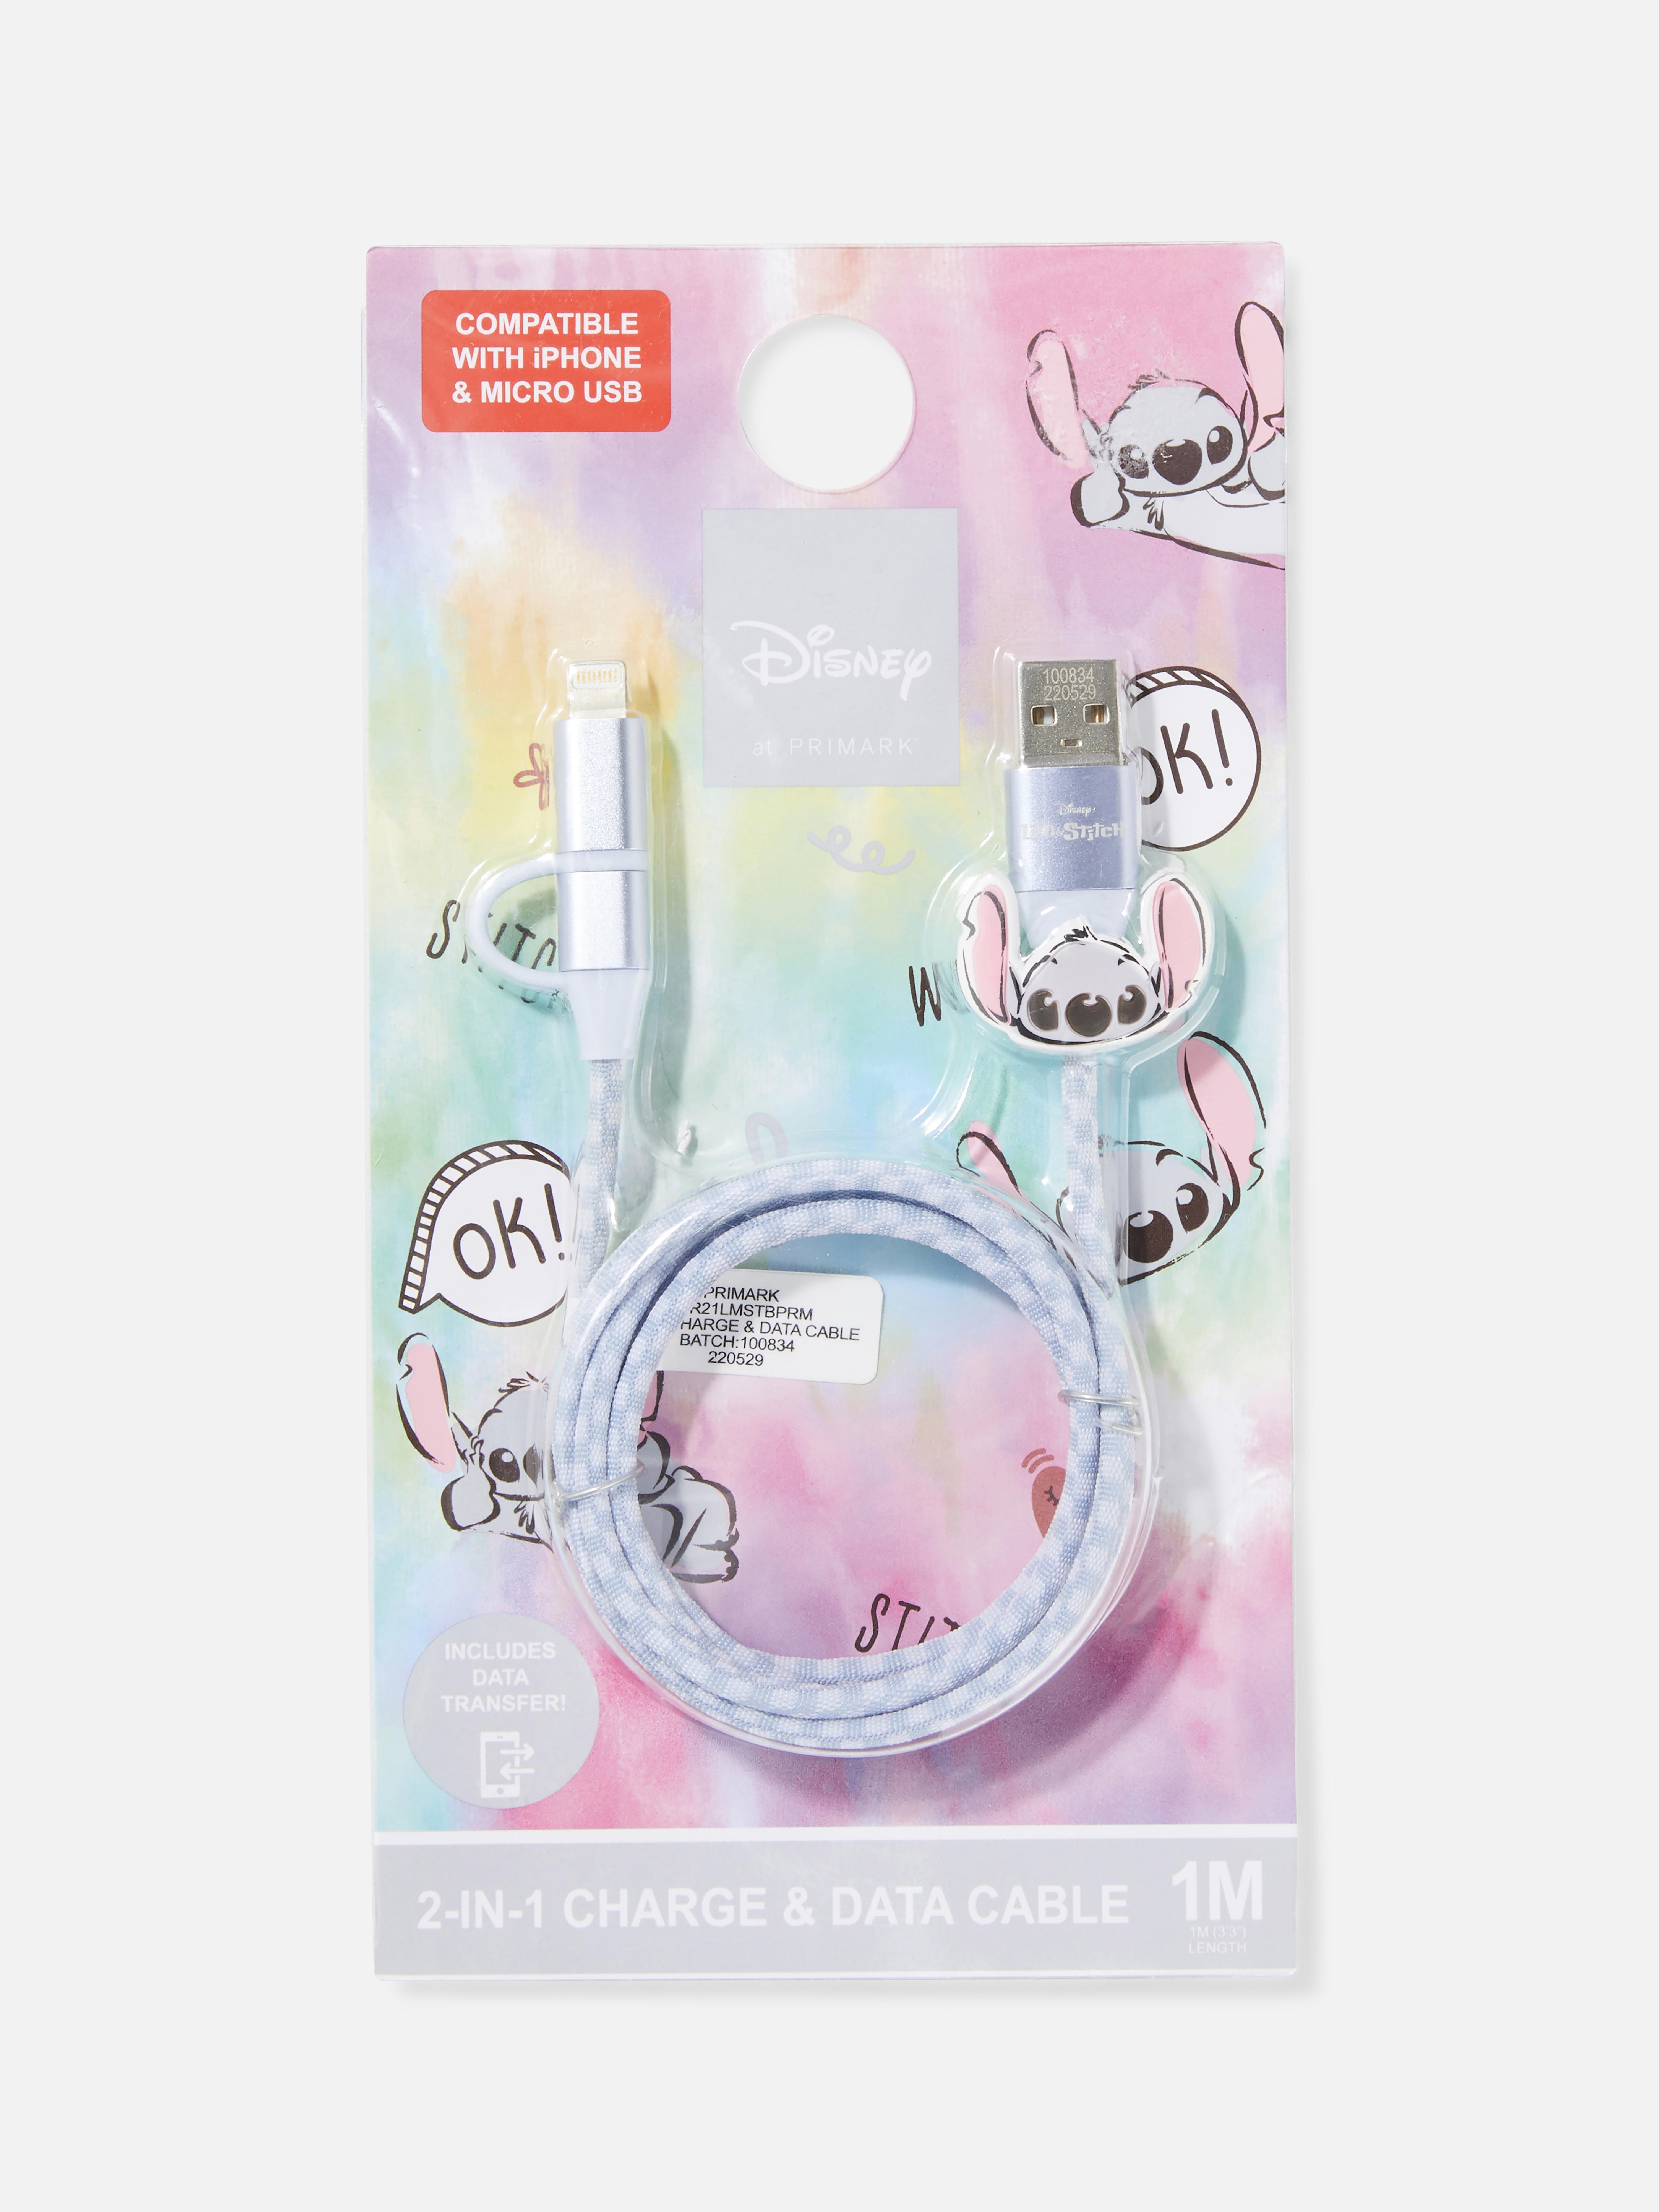 Disney's Lilo & Stitch Charging Cable